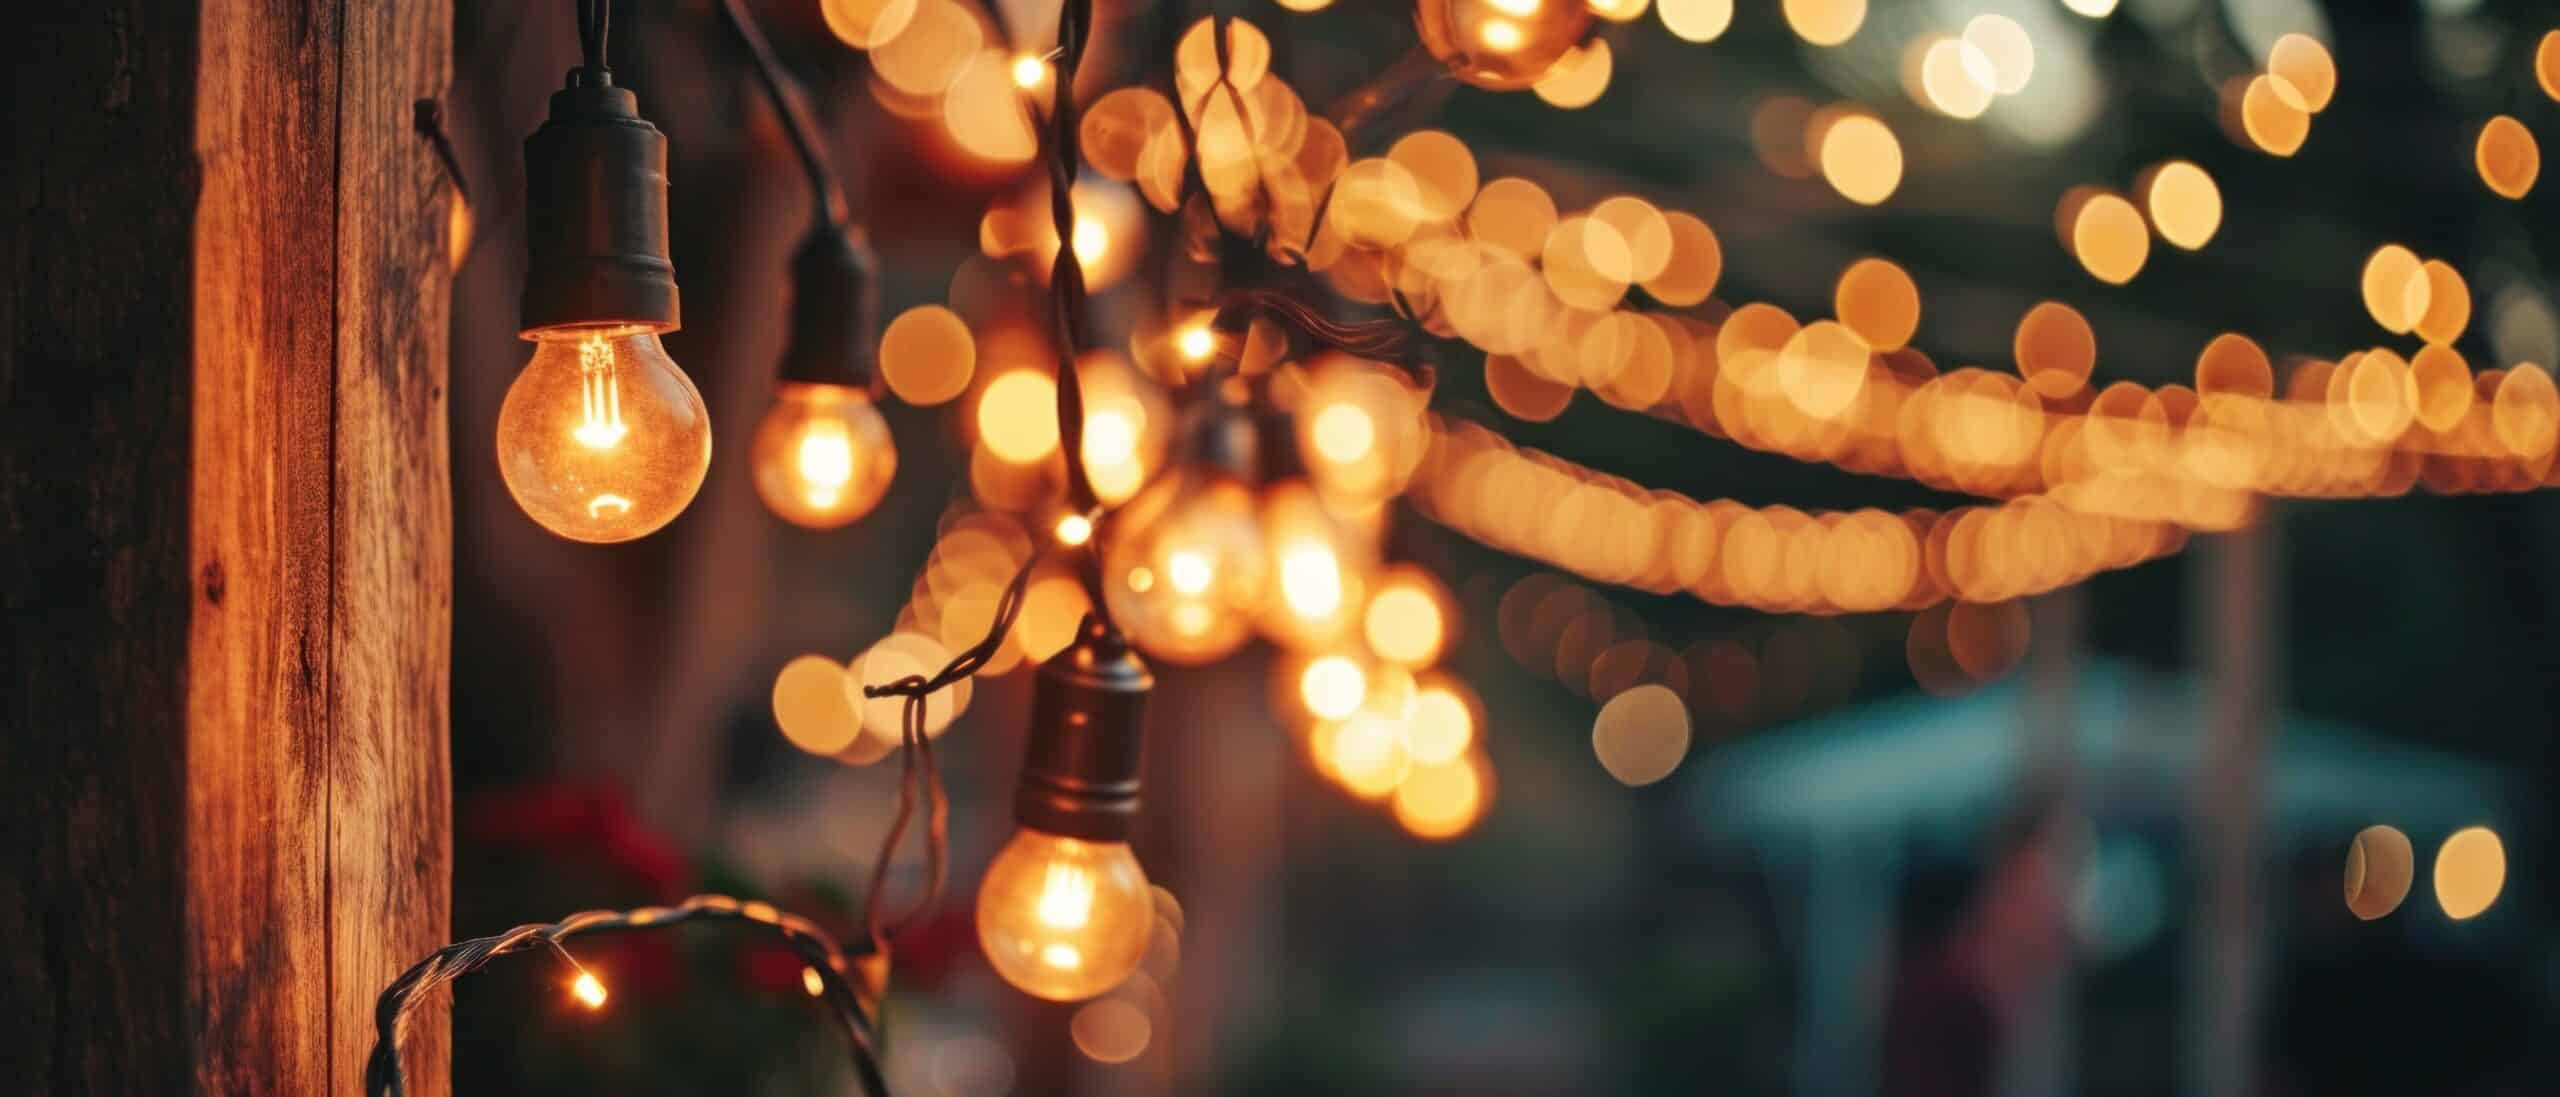 www.appr.com : How do you wire outdoor lights?